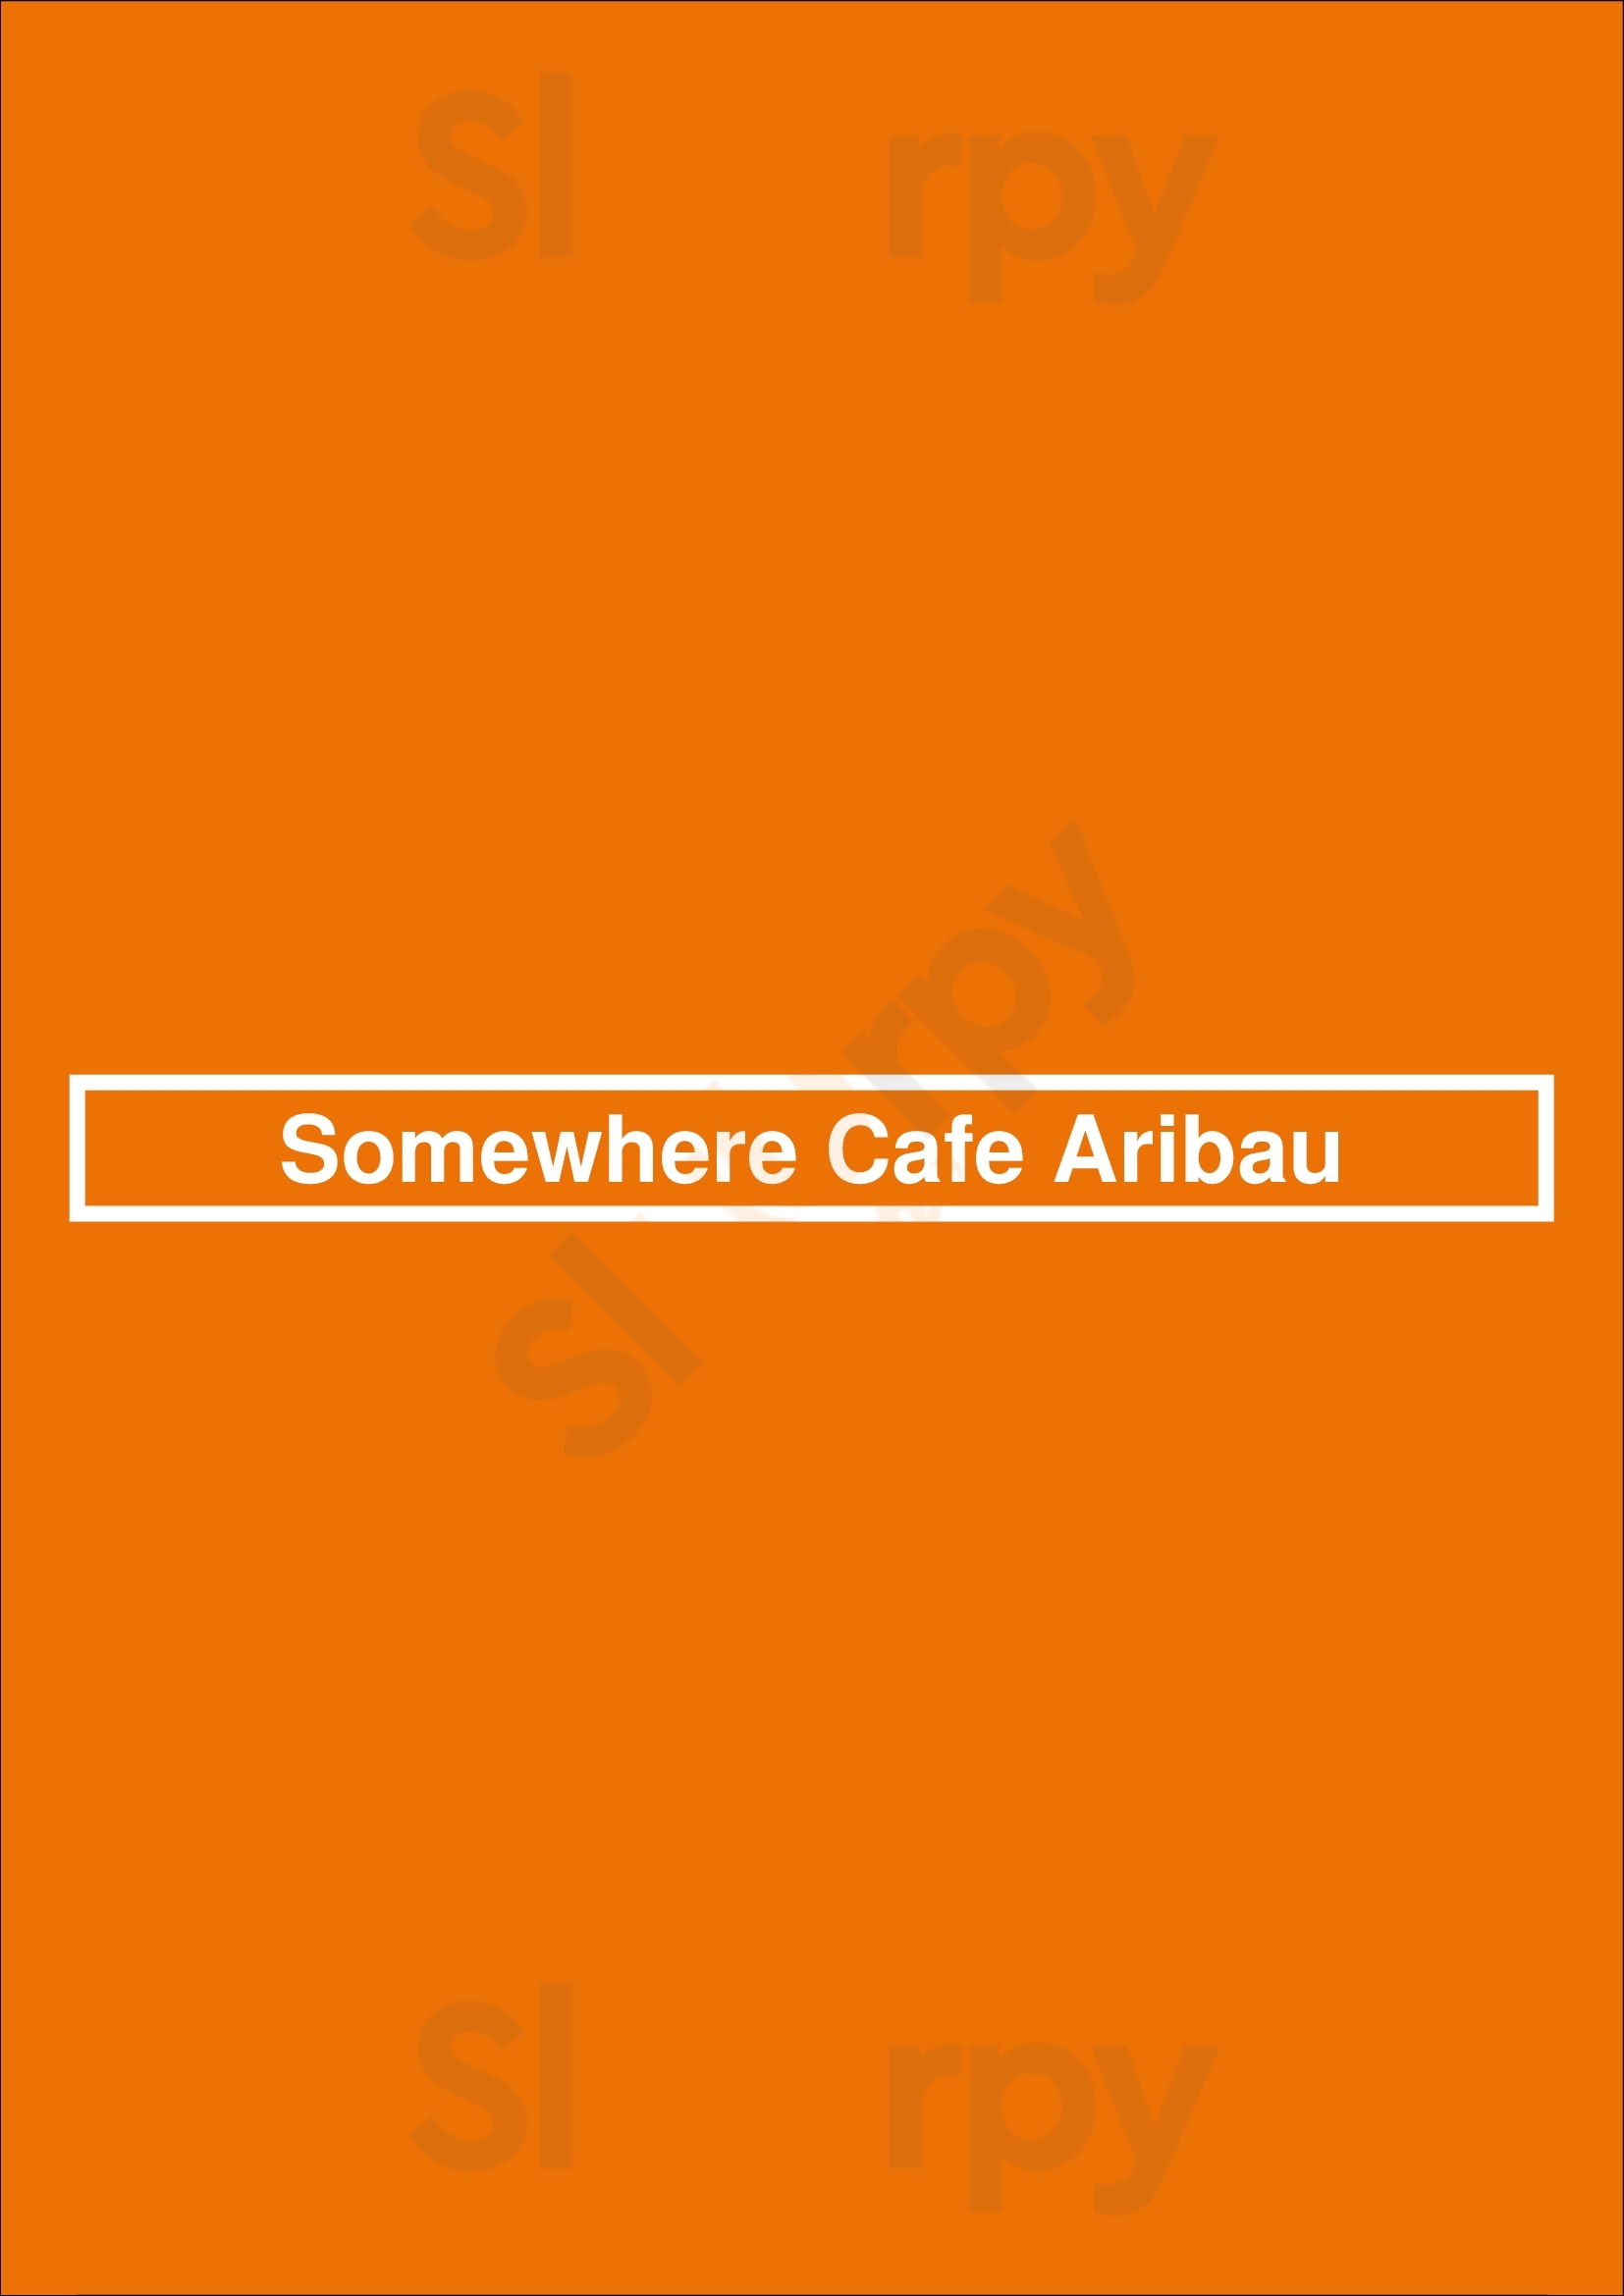 Somewhere Cafe Aribau Barcelona Menu - 1